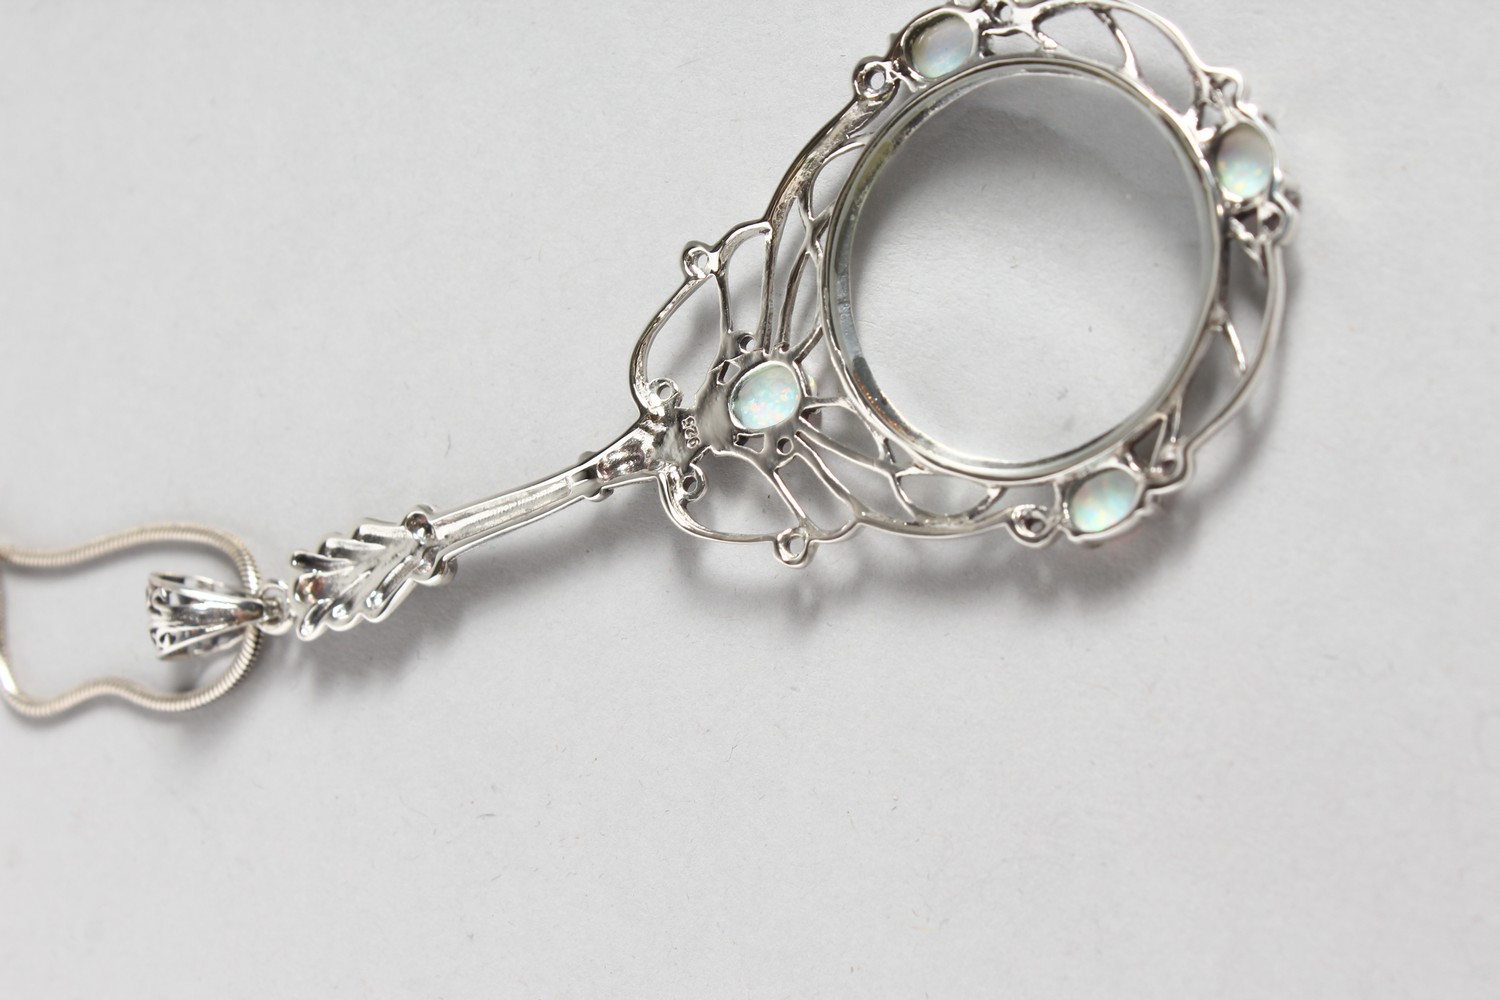 A SILVER OPAL SET SPY GLASS on a chain. - Image 2 of 4